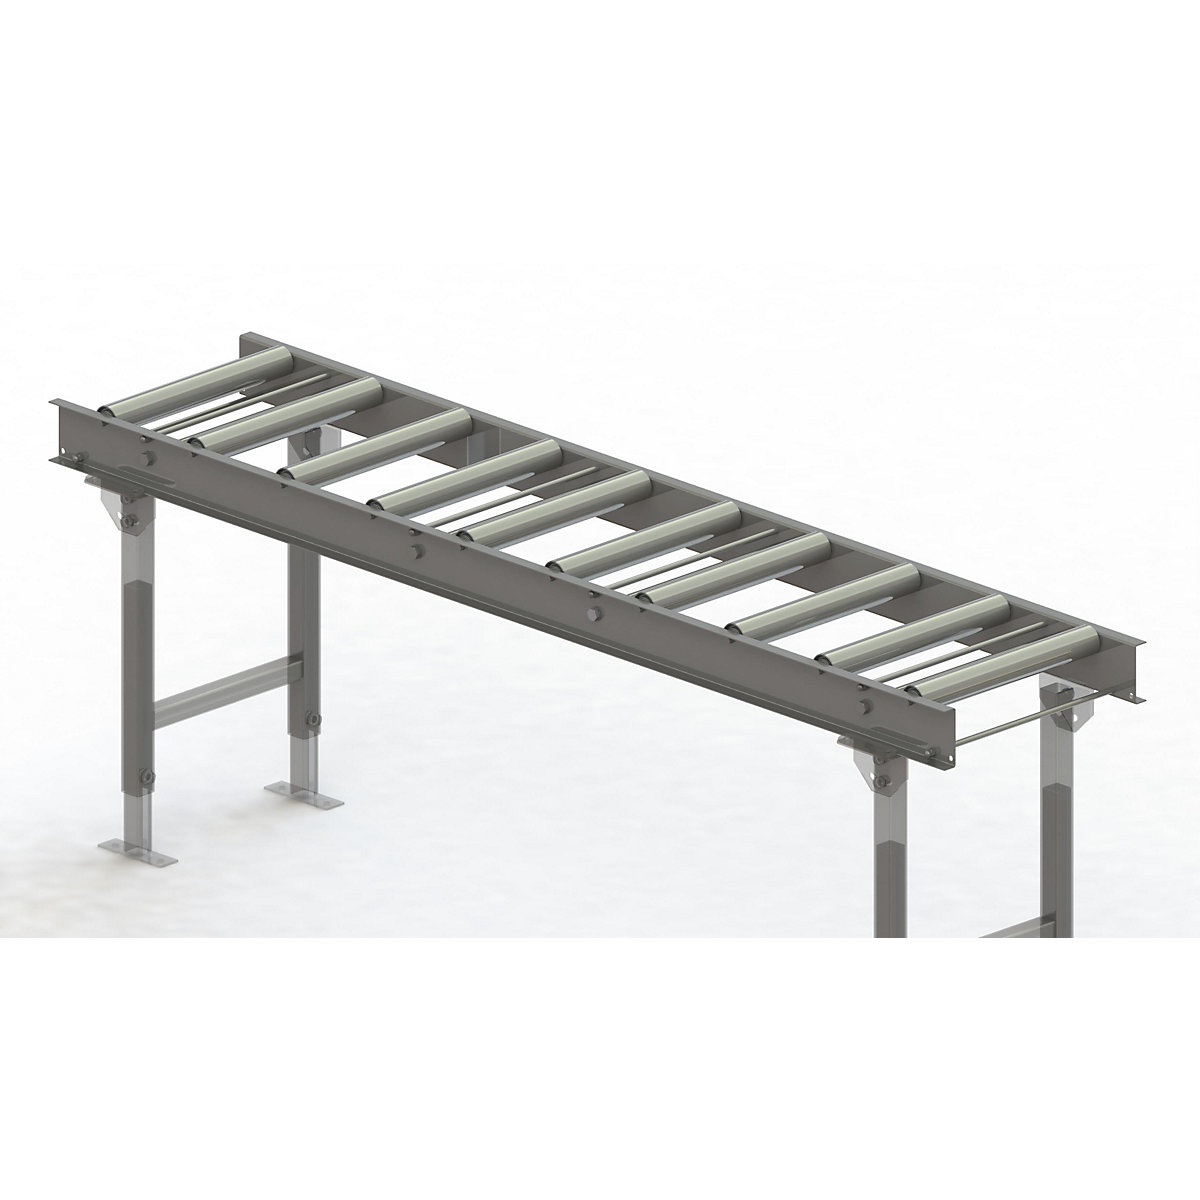 Gura – Roller conveyor, steel frame with zinc plated steel rollers, track width 400 mm, distance between axles 200 mm, length 2 m